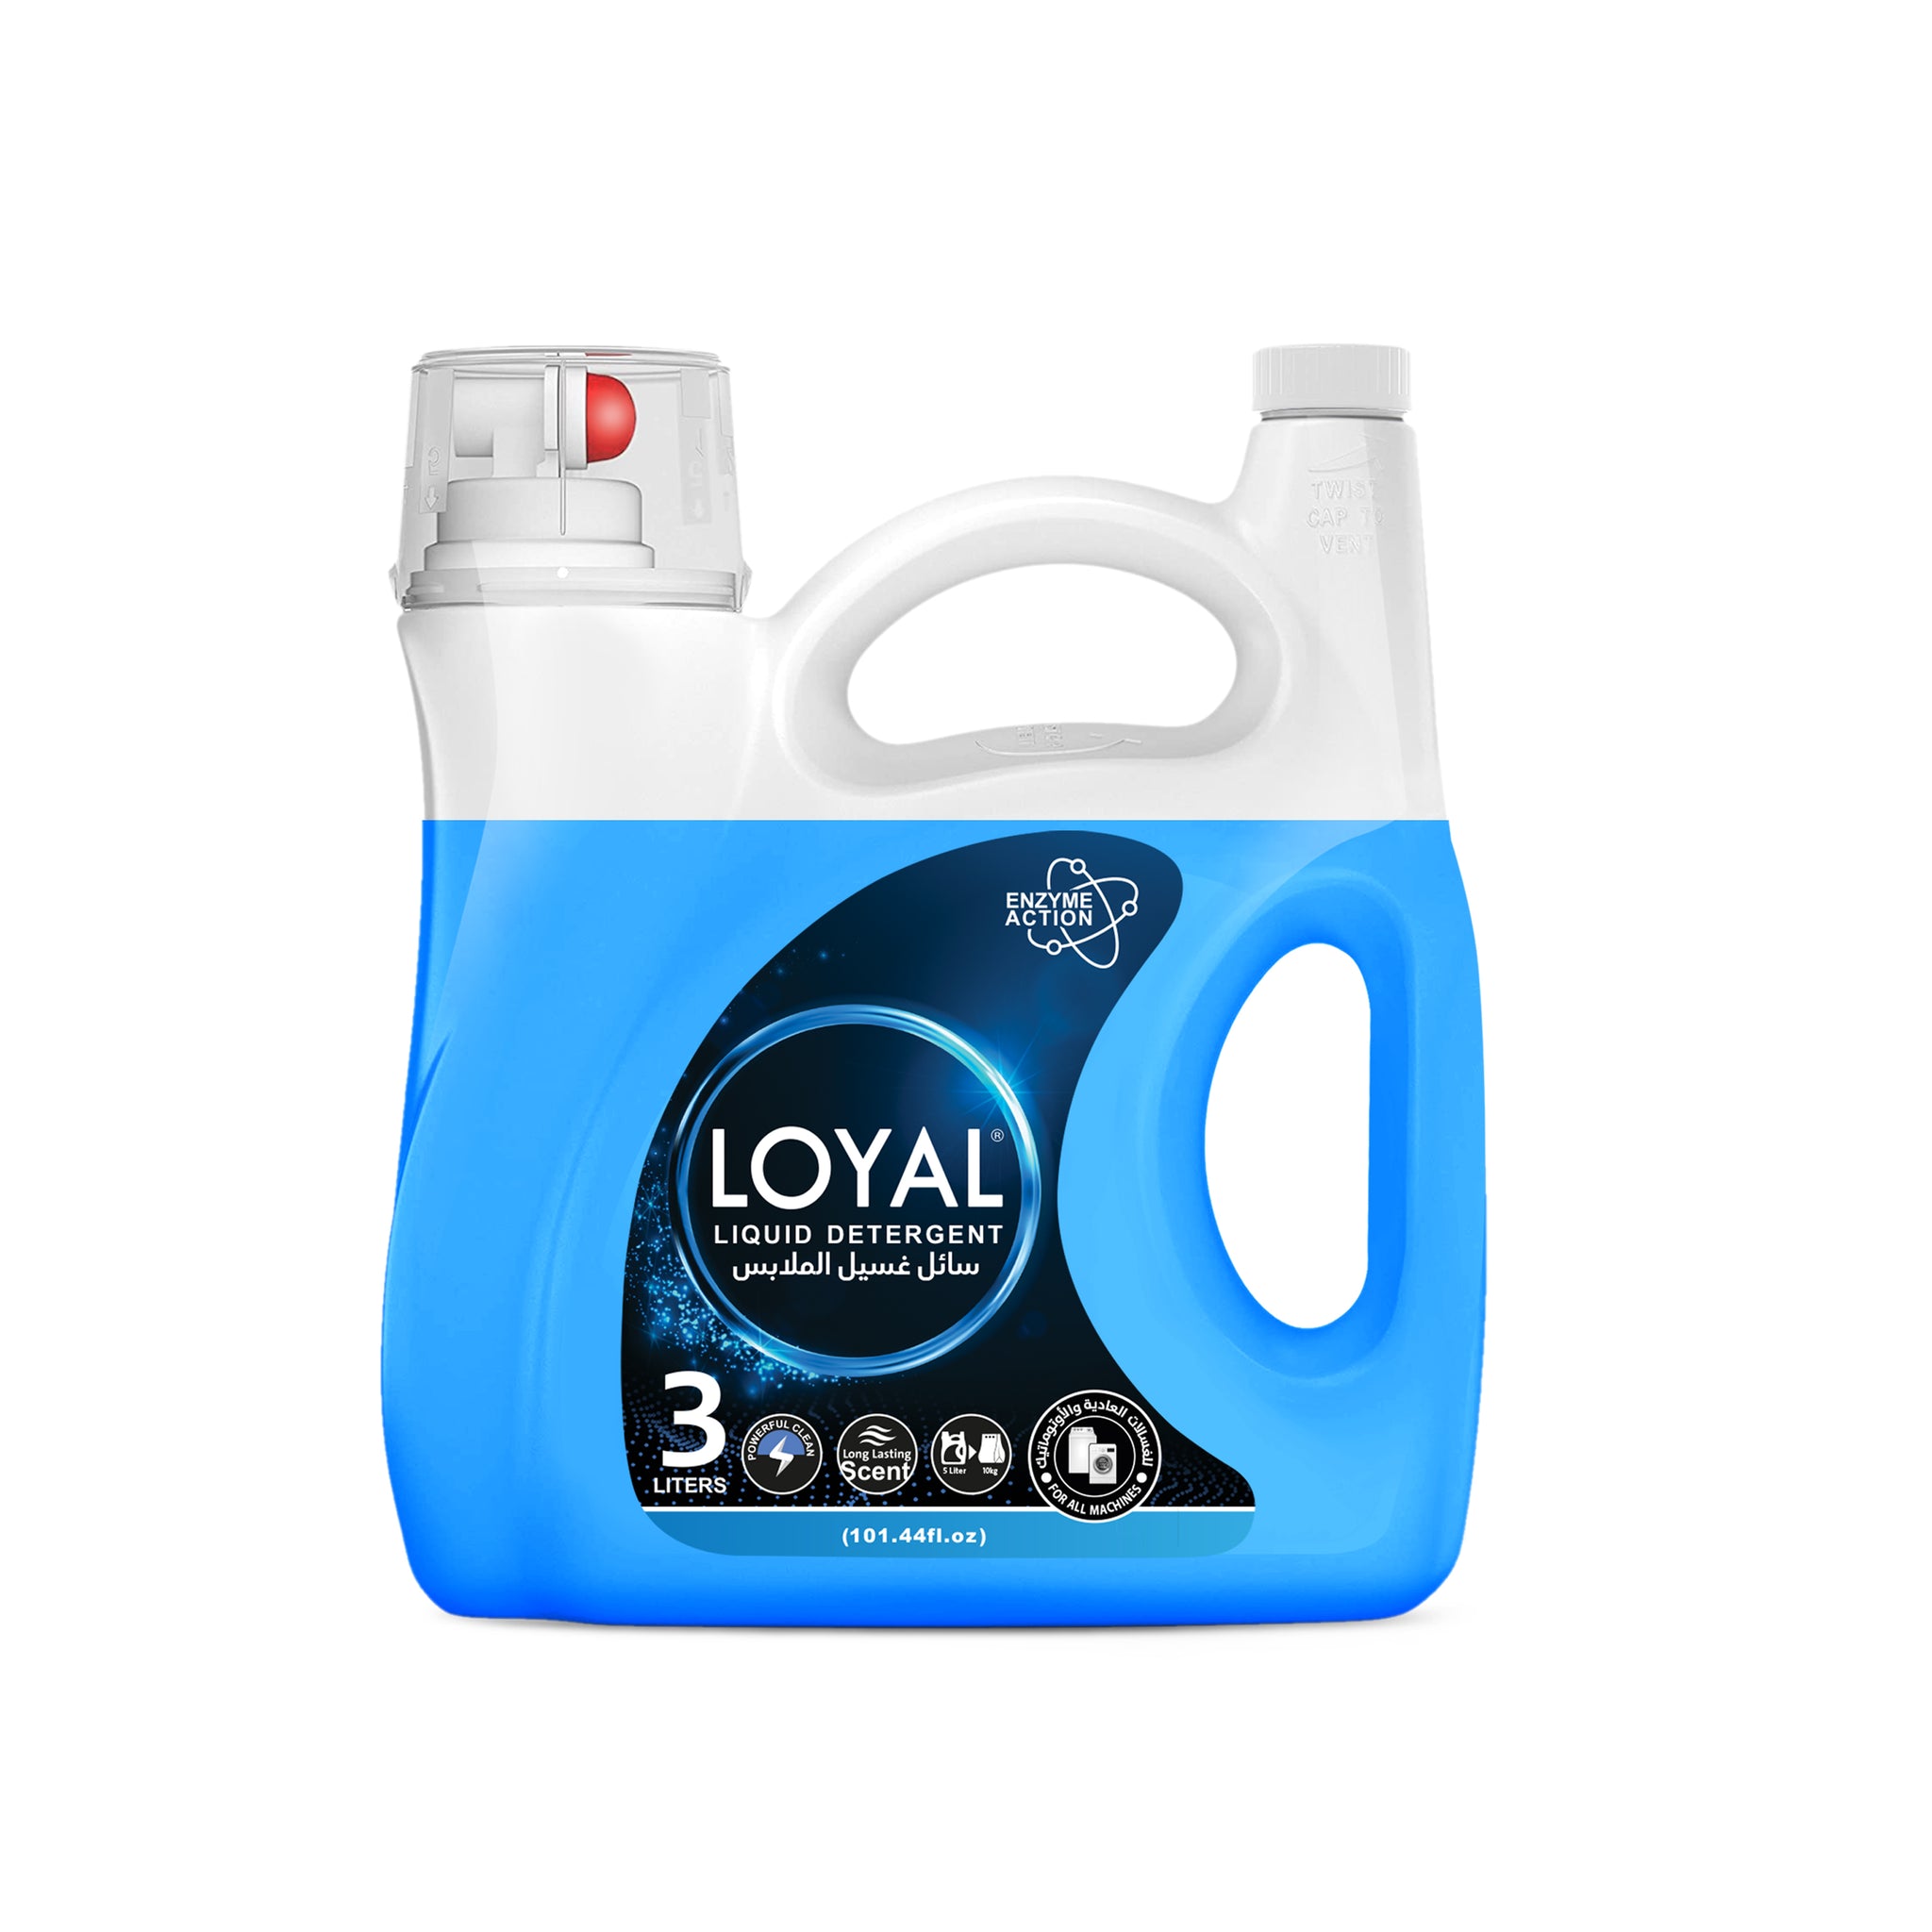 Loyal Liquid Detergent 3L